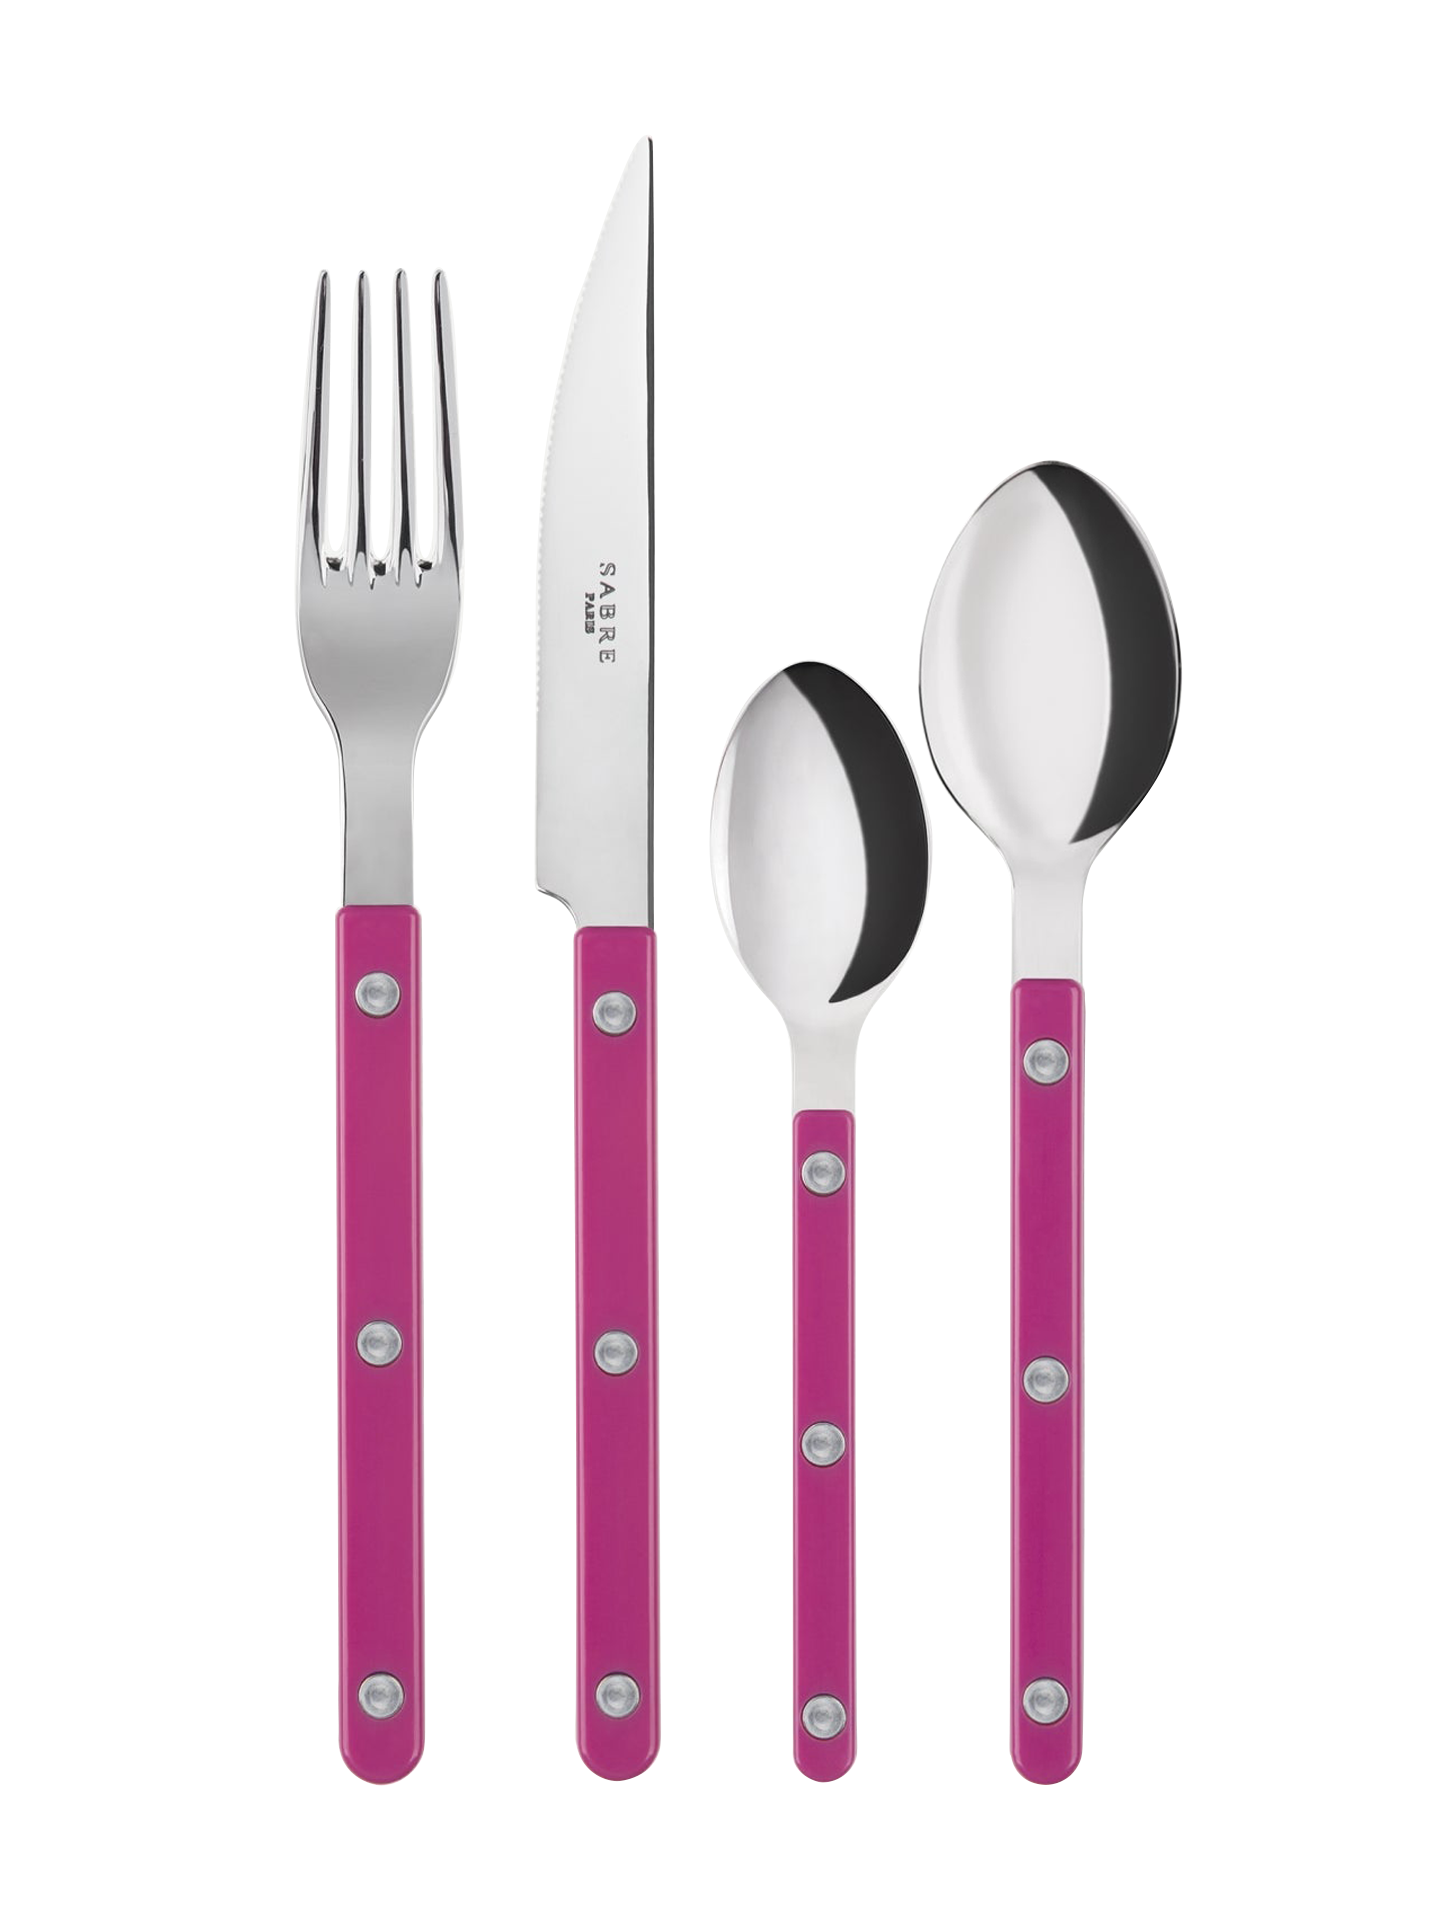 Bistrot dinner knife, raspberry pink